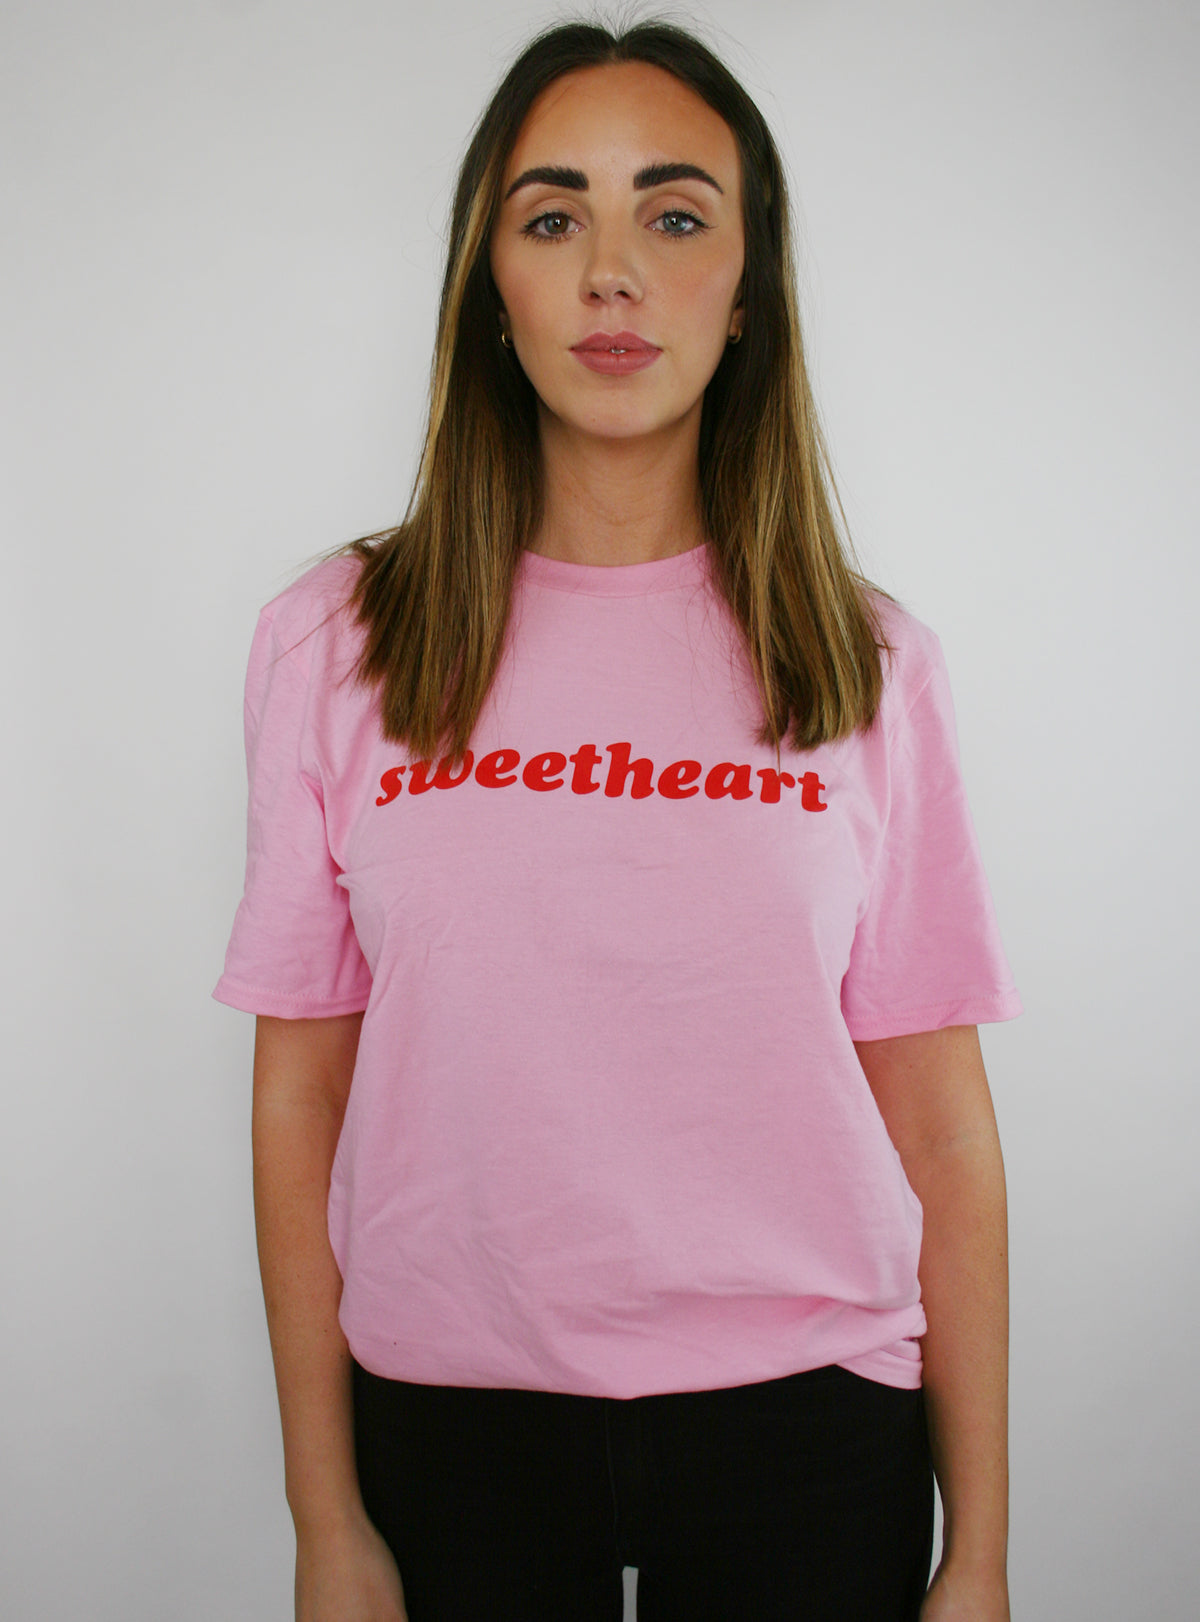 Sweetheart + Sweet Potato Matching T-Shirt Set